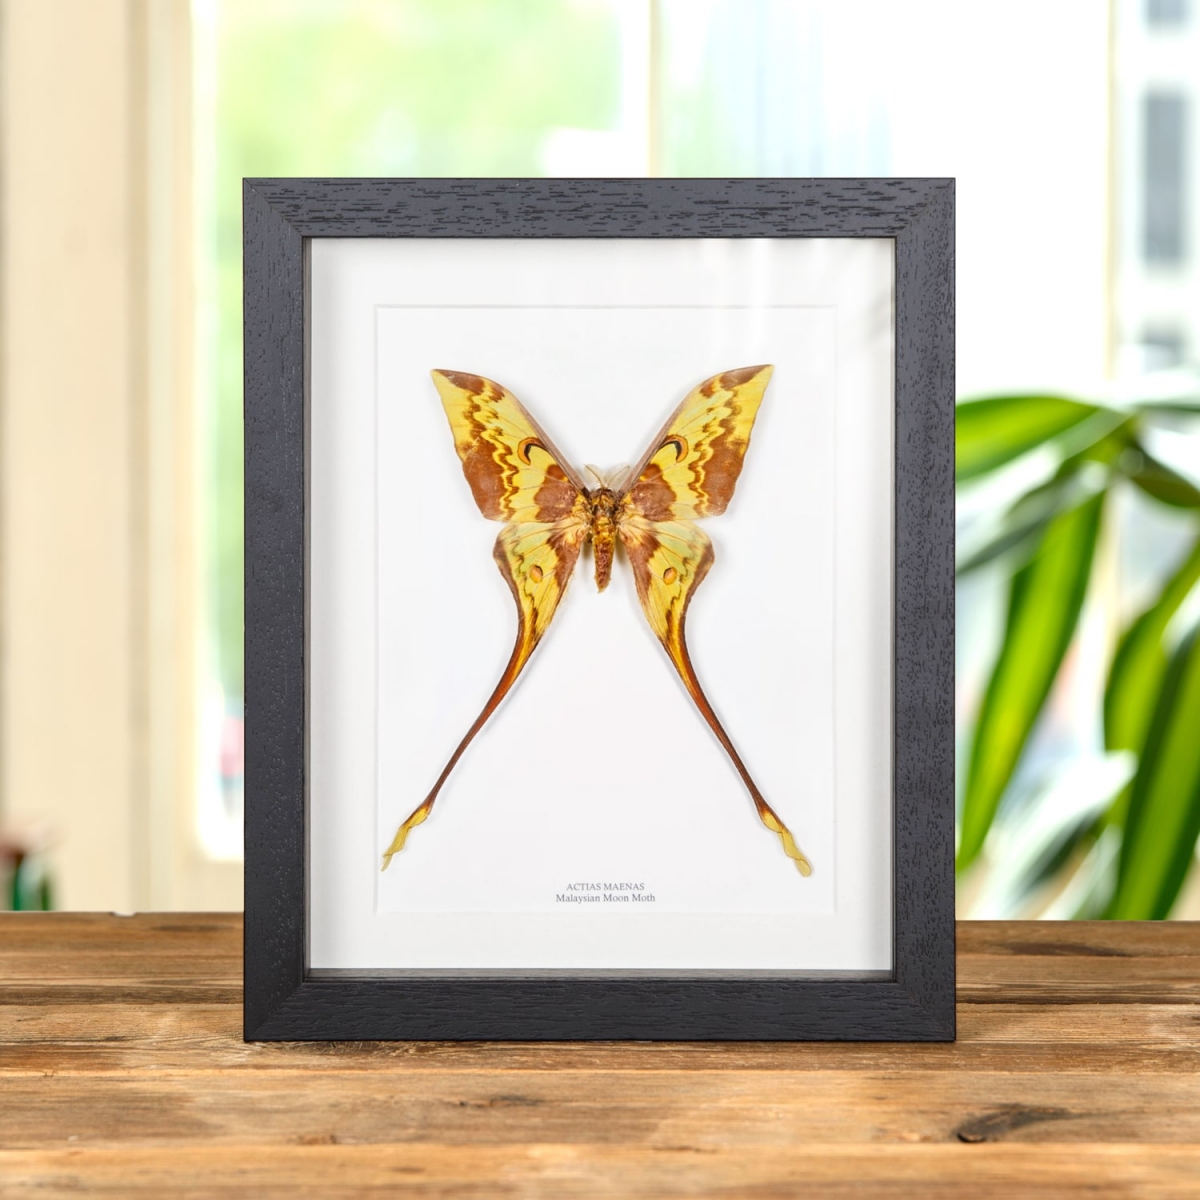 Minibeast Malaysian Moon Moth in Box Frame (Actias maenas)